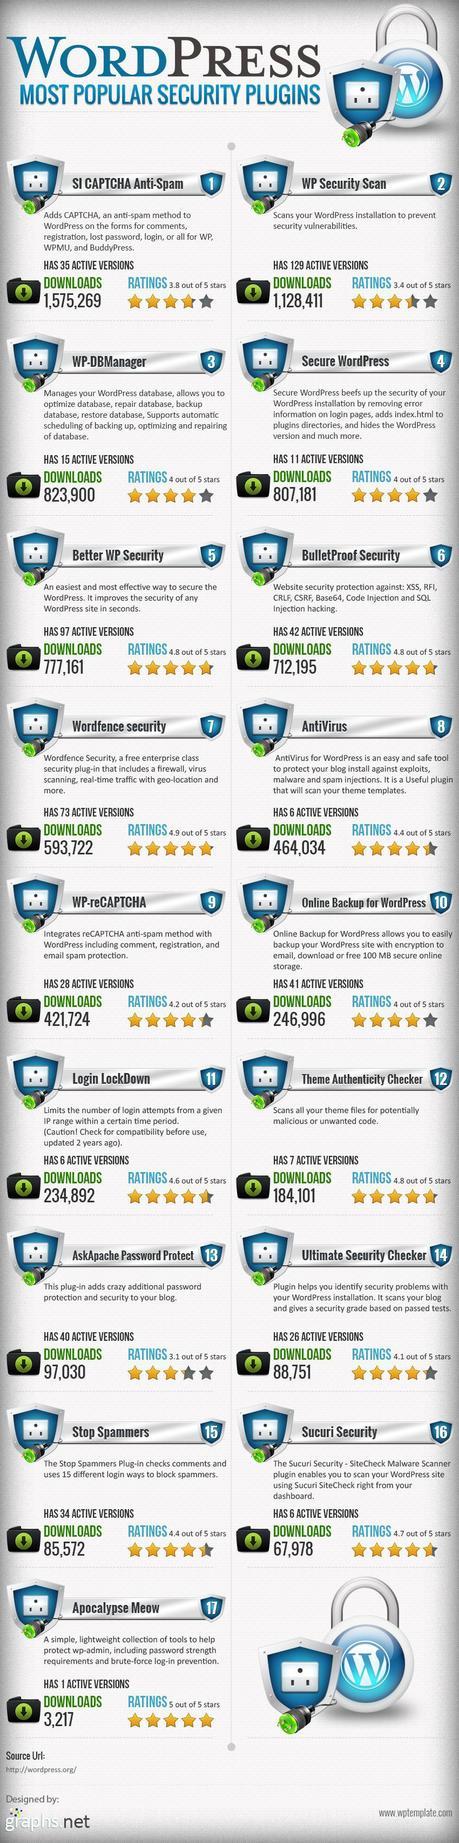 WordPress Most Popular Security Plugins